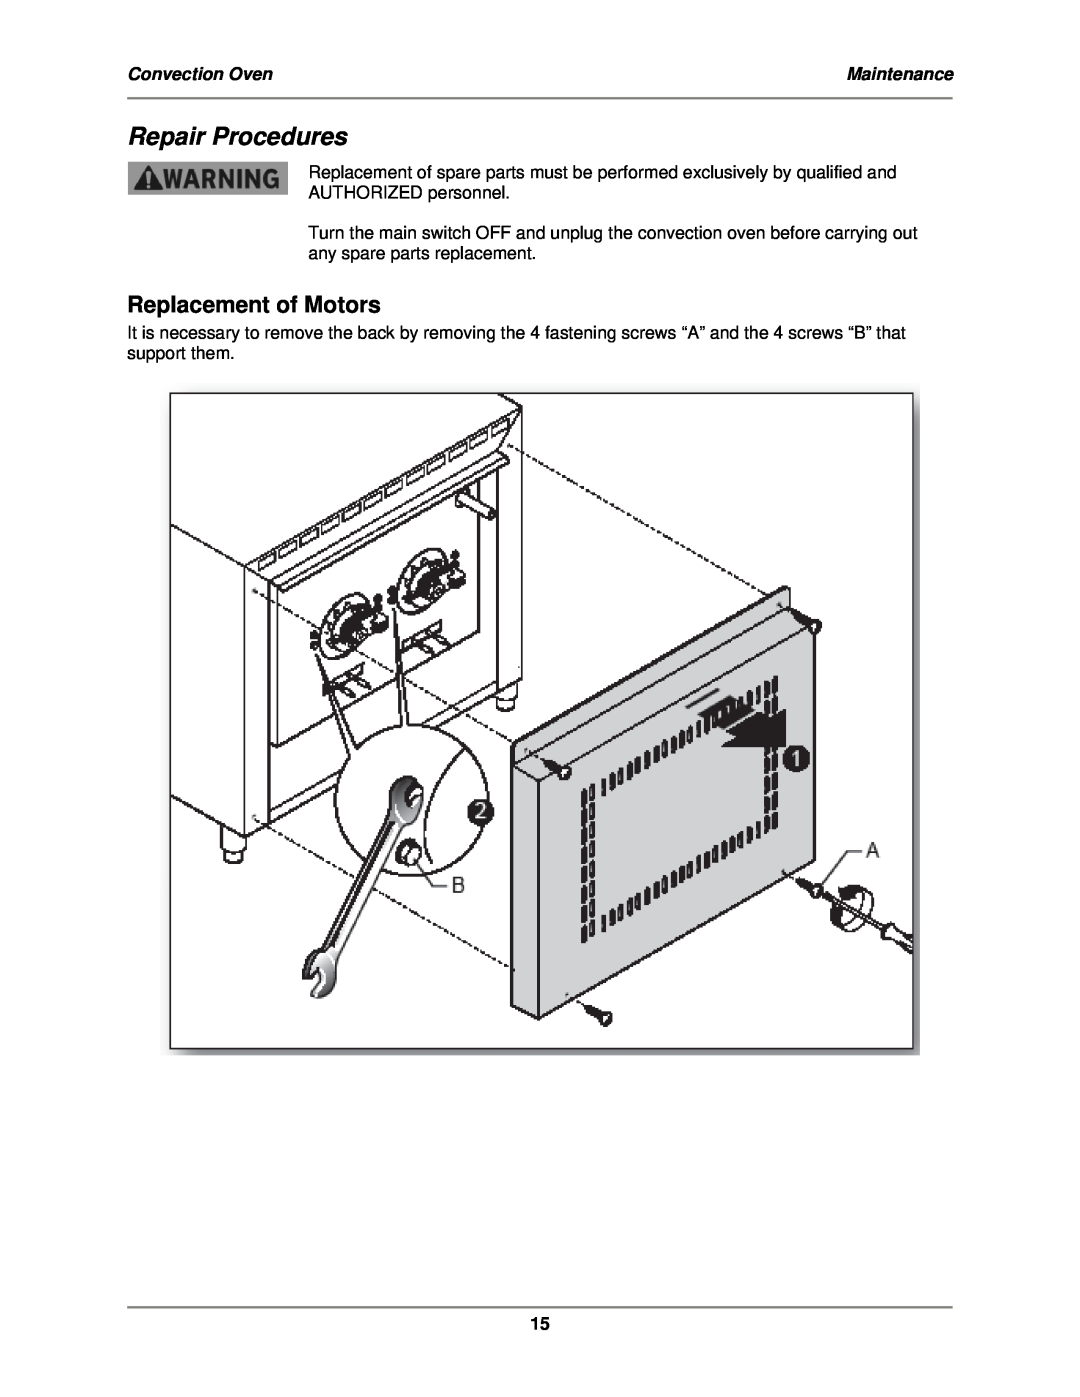 Bakers Pride Oven MT-200 service manual Repair Procedures, Replacement of Motors, Convection Oven, Maintenance 